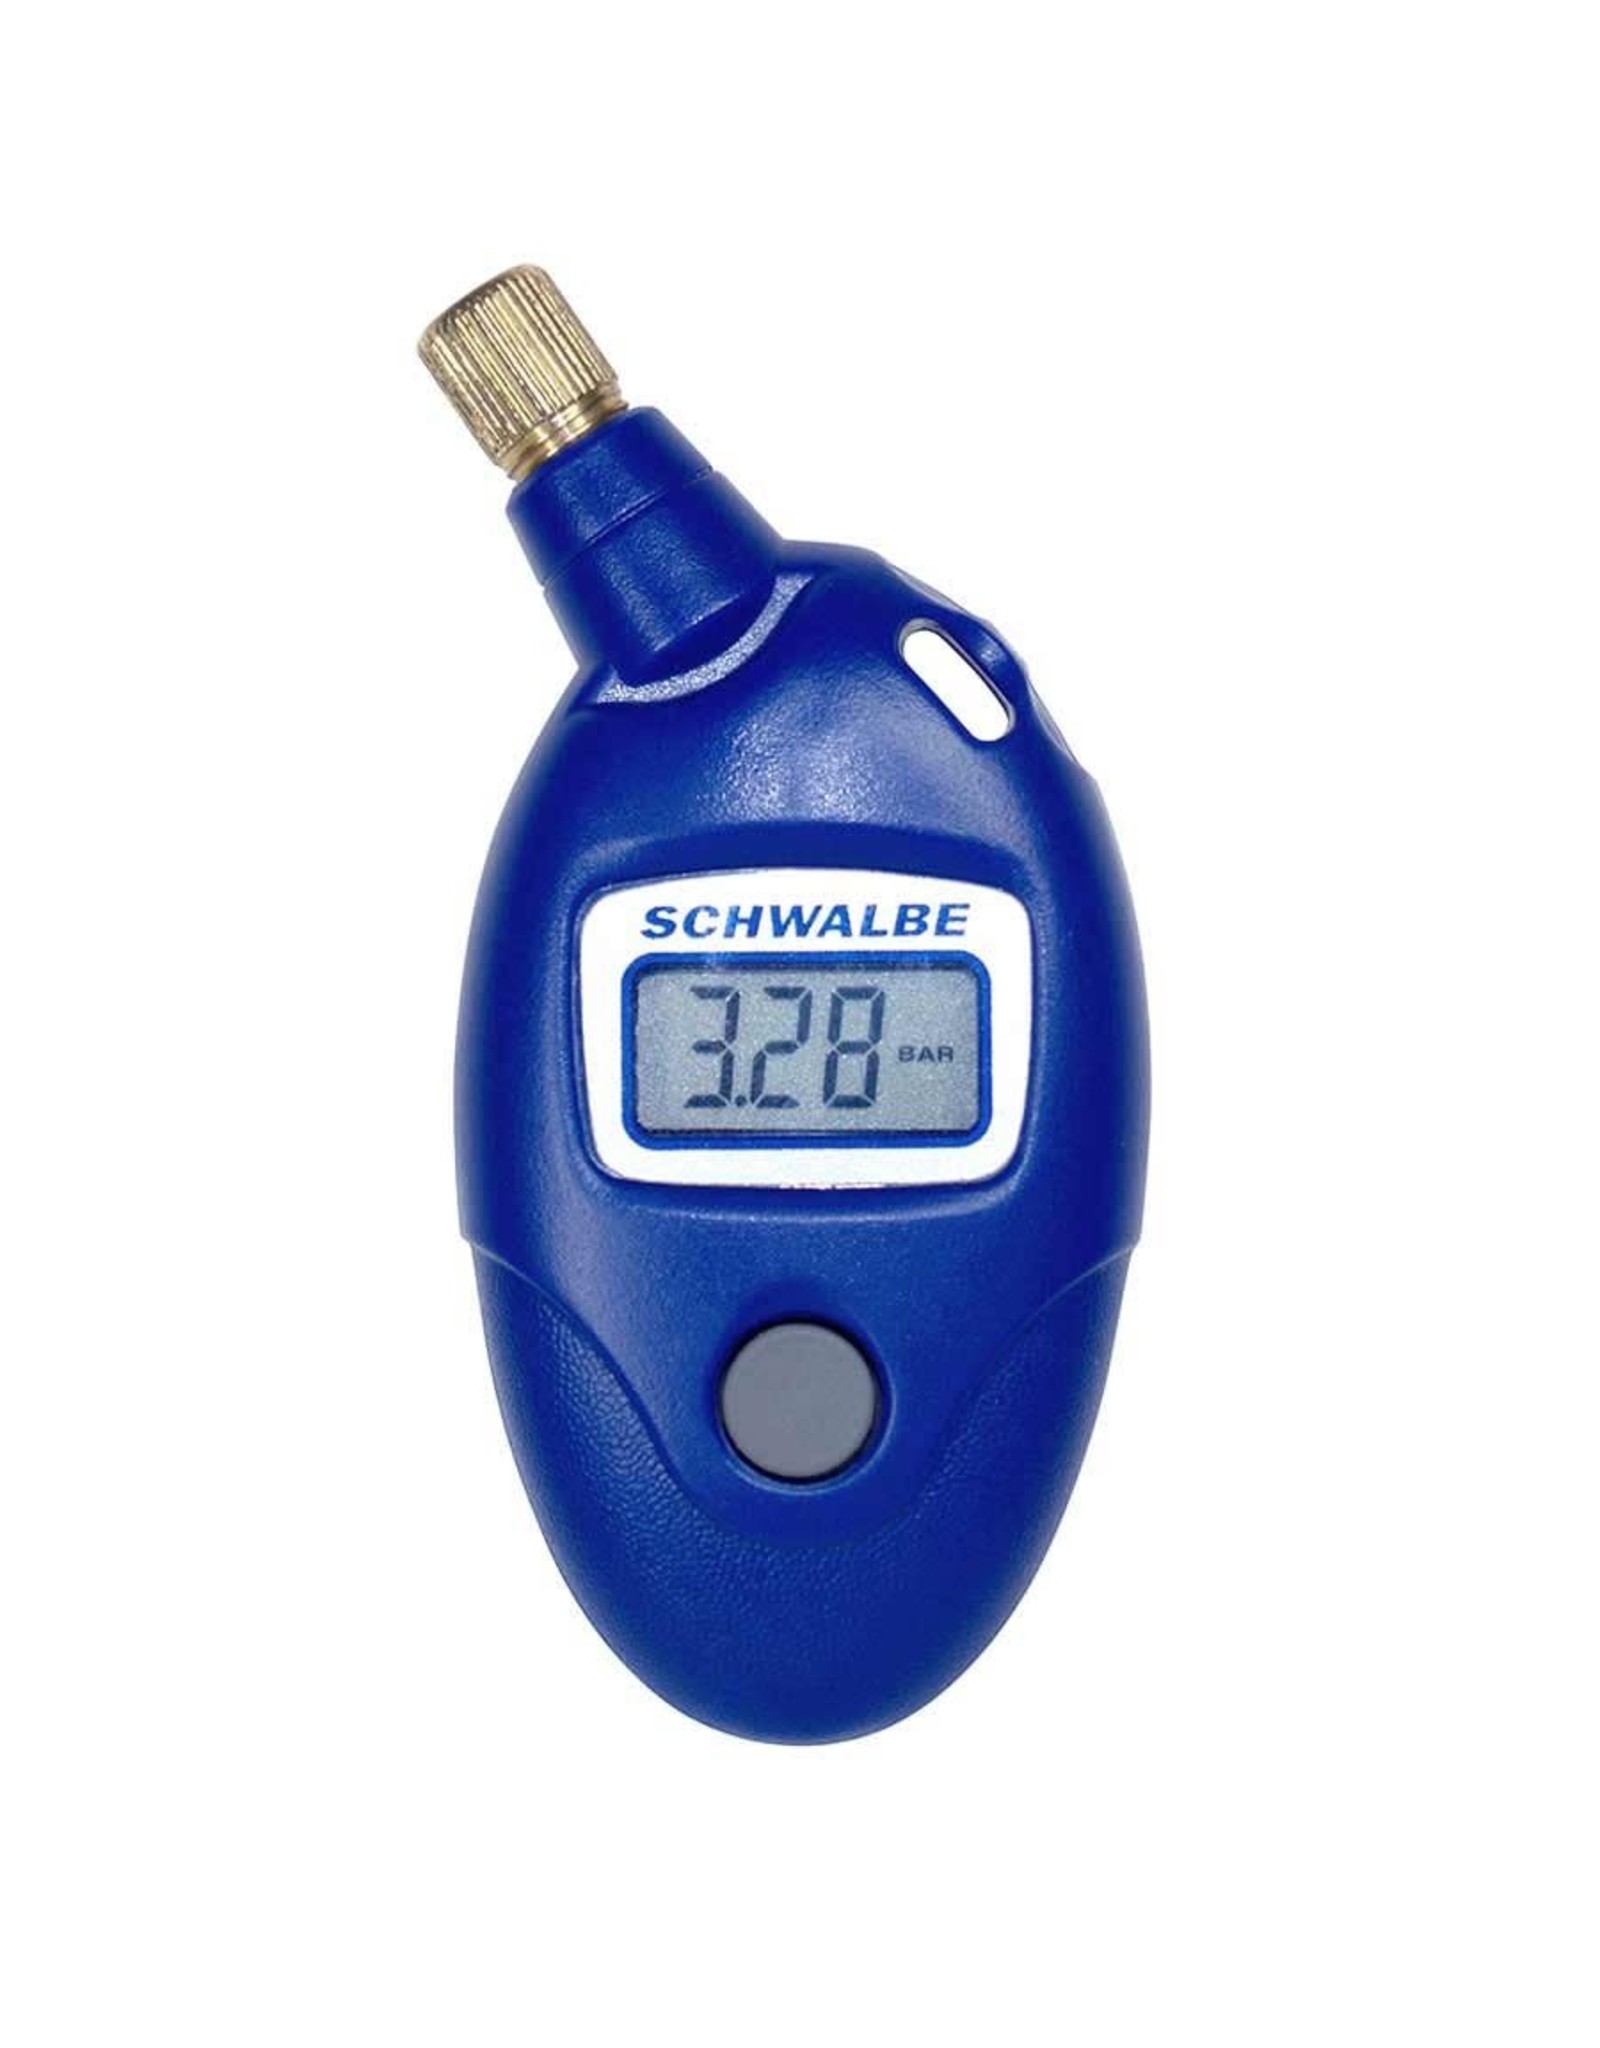 Schwalbe Schwalbe Airmax pressure gauge